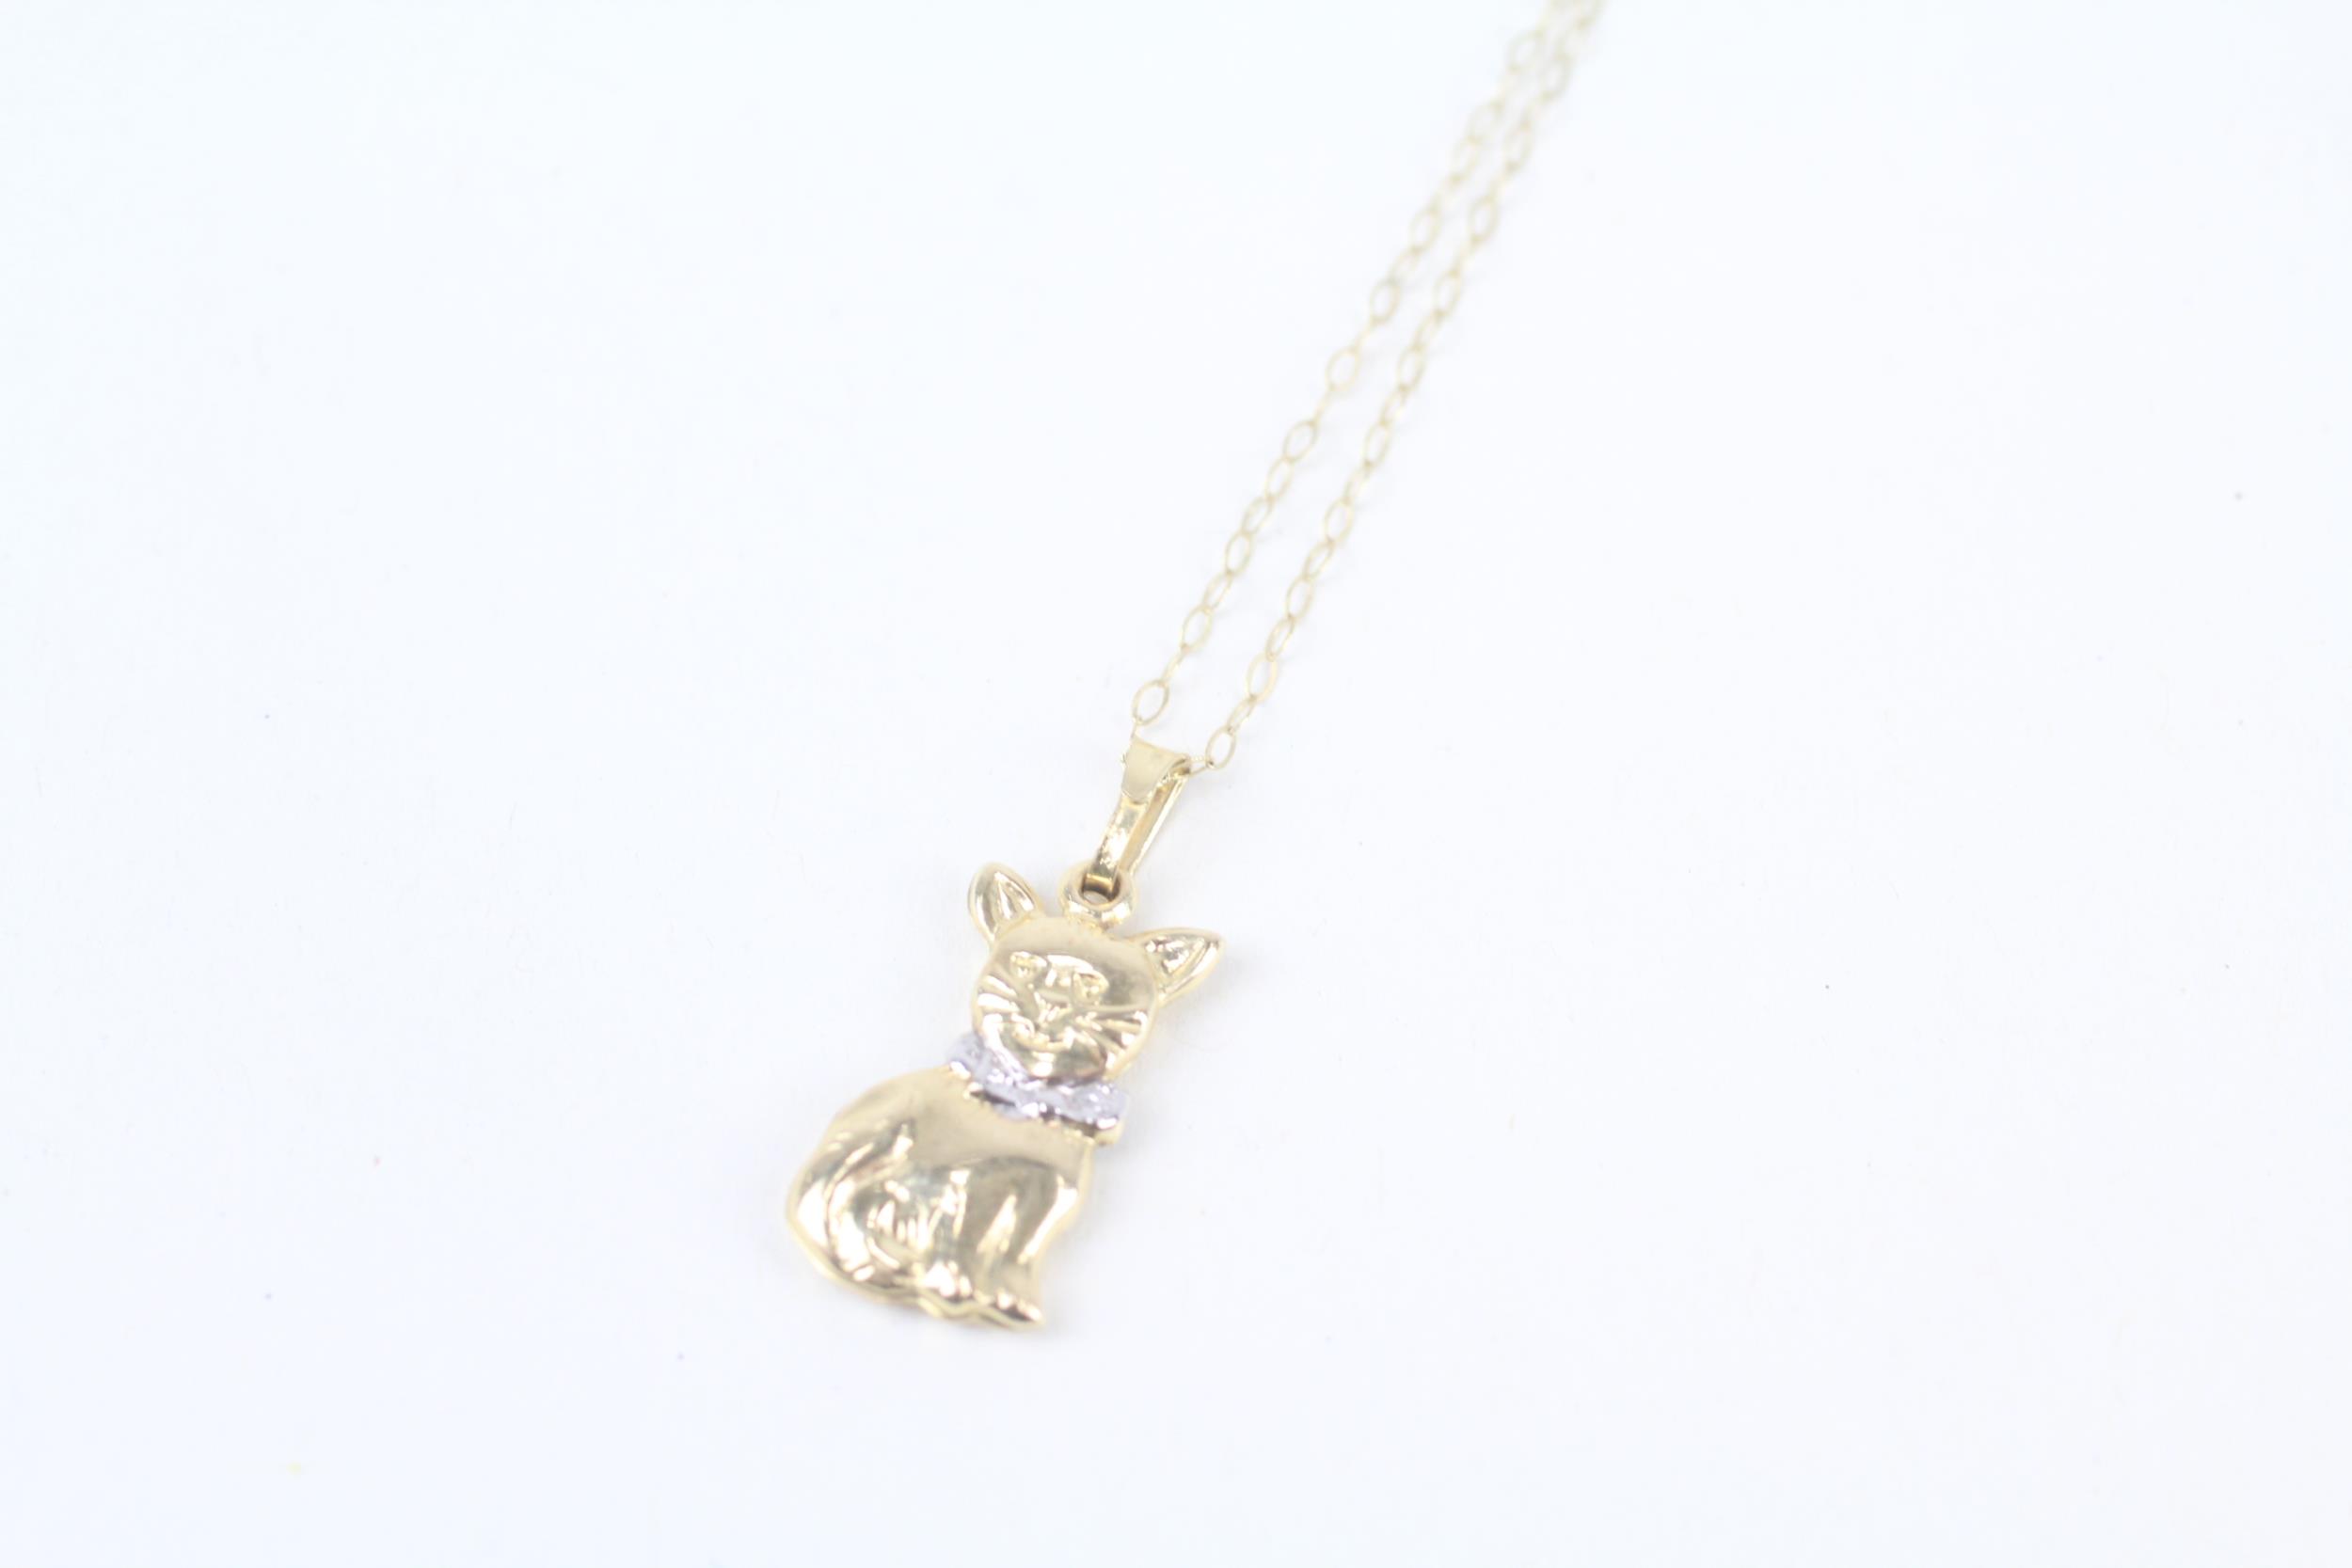 9ct gold cat pendant necklace